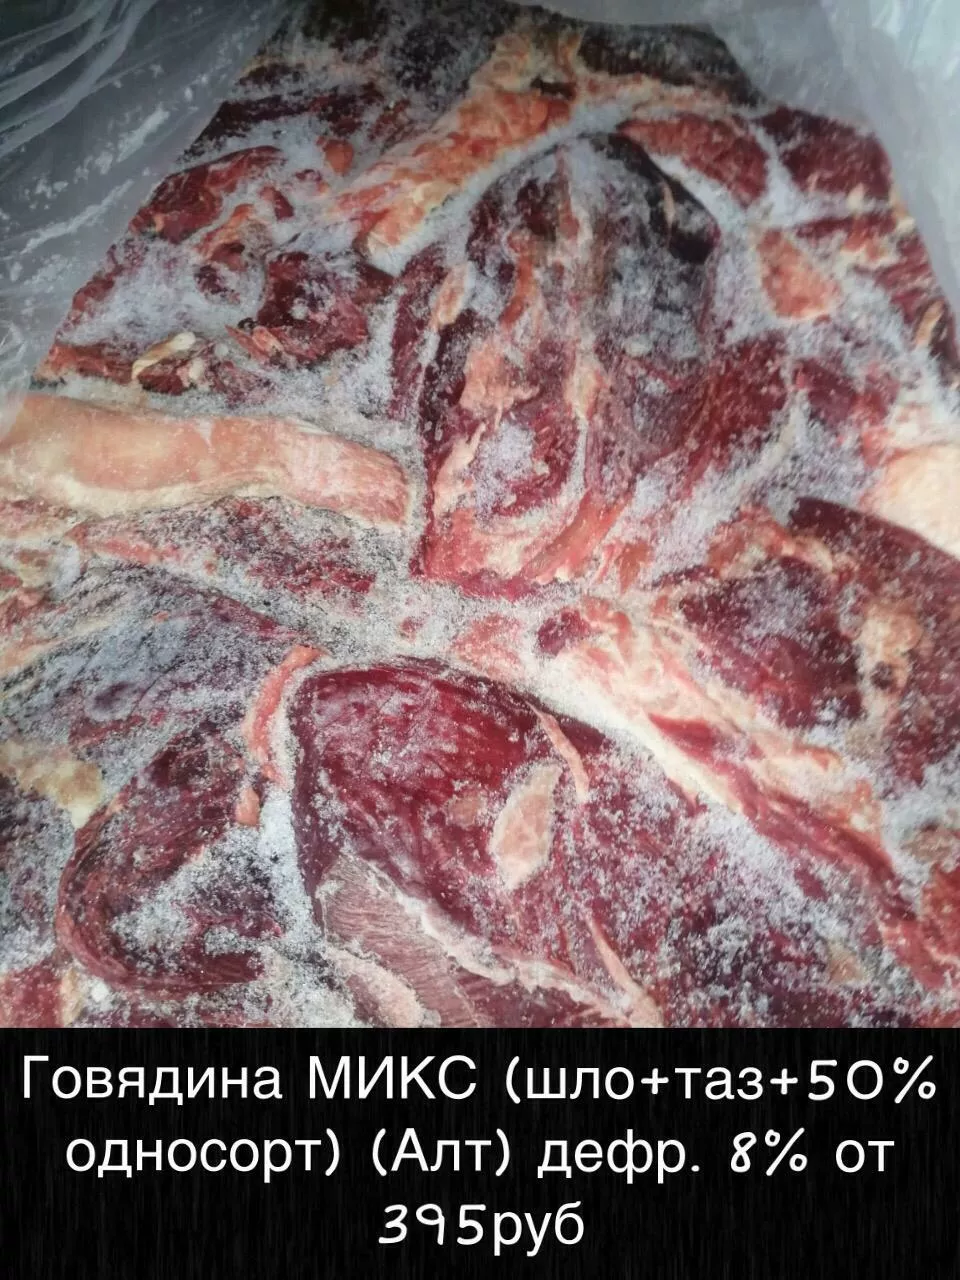 мясо - говядина и др оптом! в Хабаровске 2